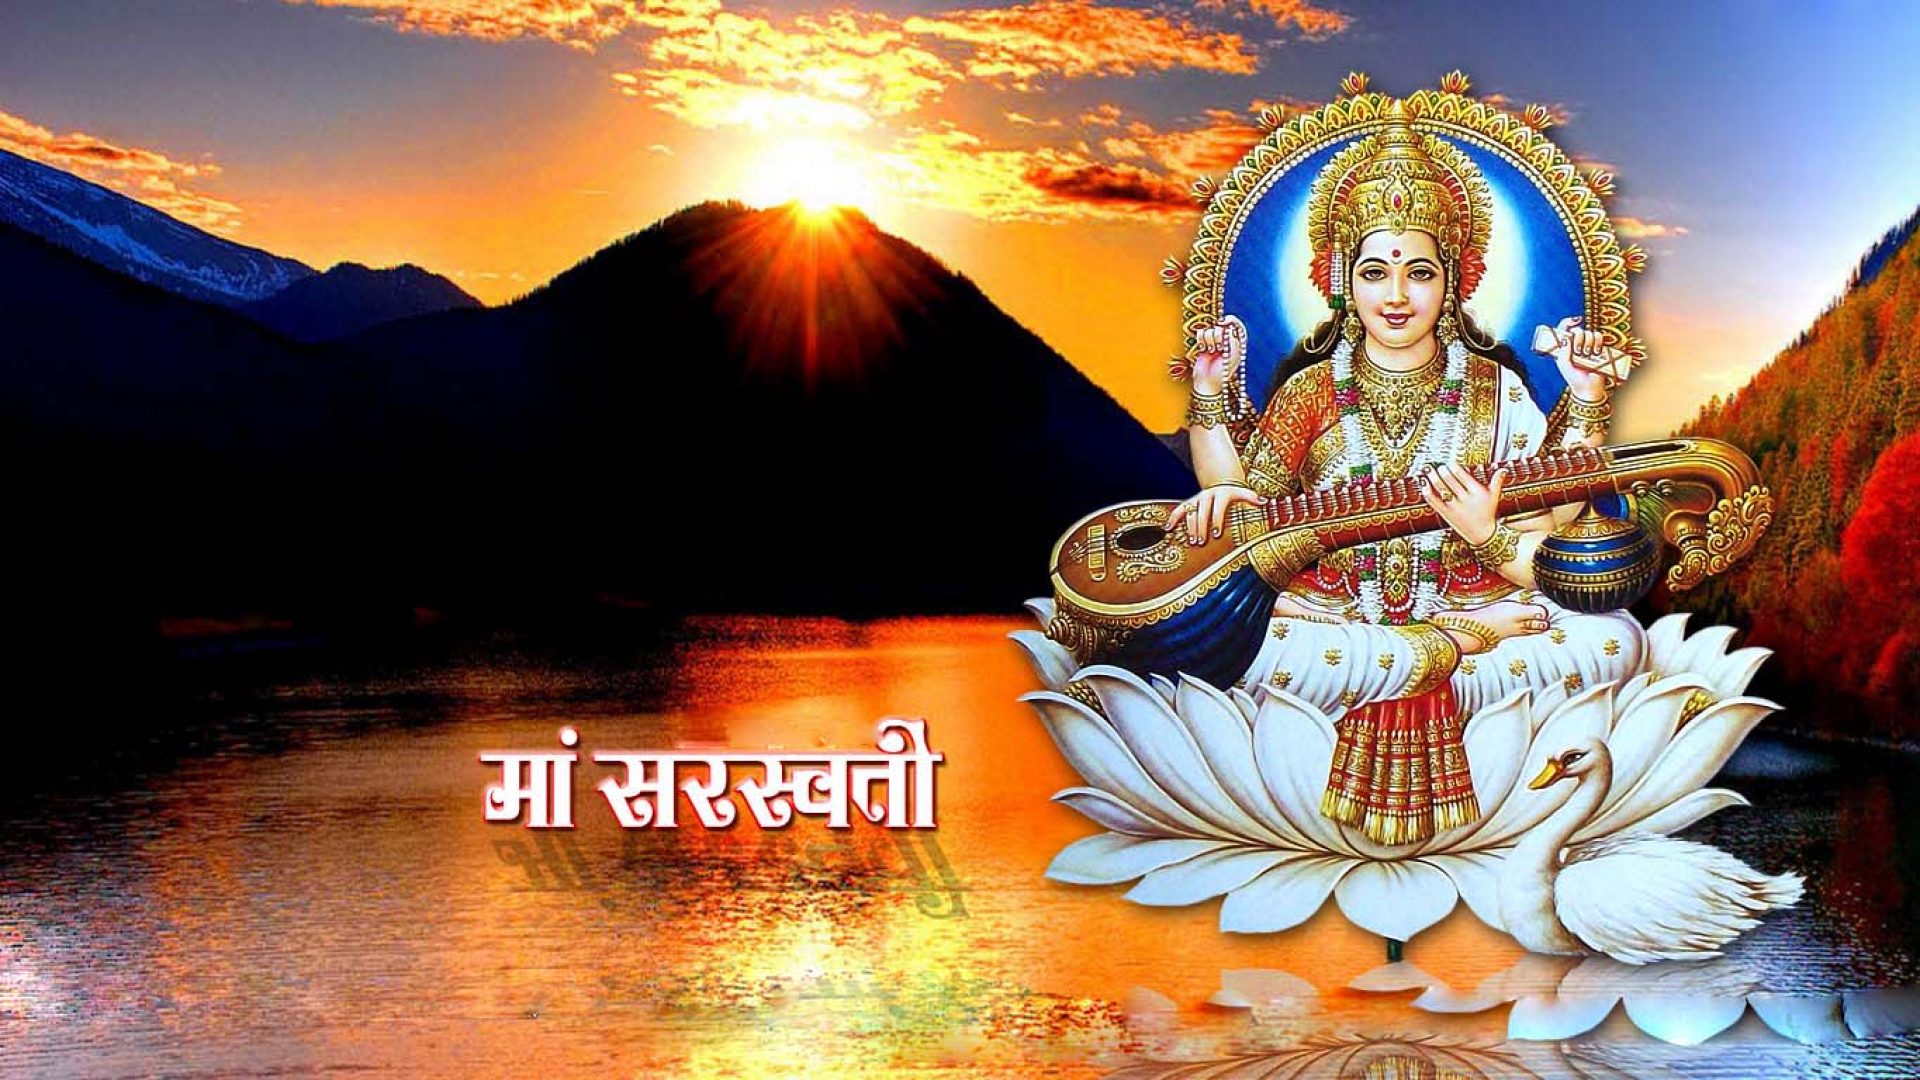 Maa Saraswati Full Hd Image Download | Hindu Gods and Goddesses